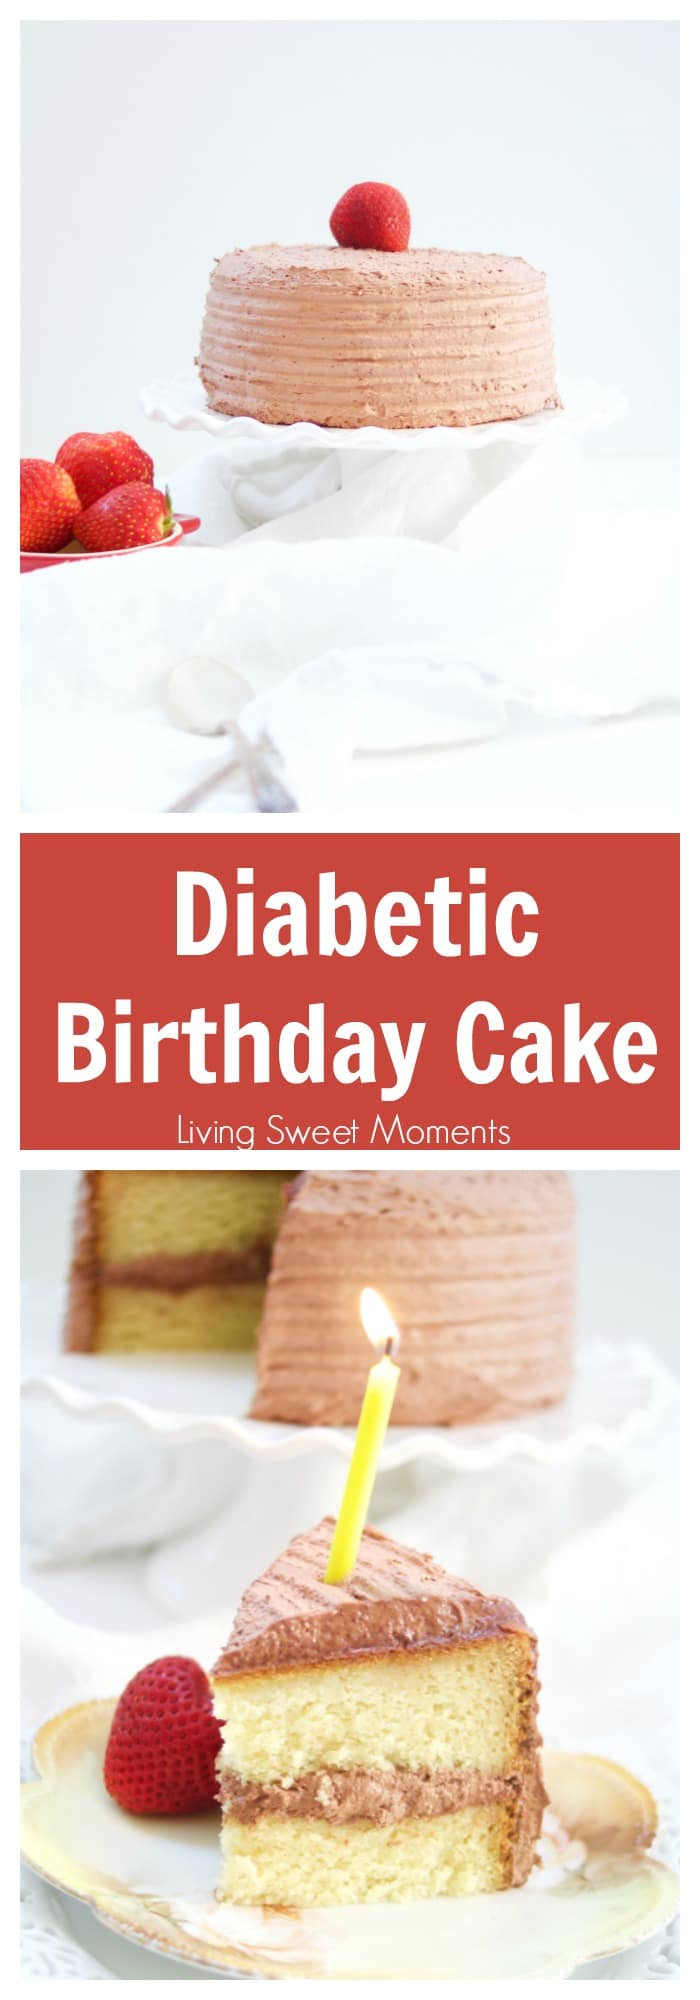 Cake Recipe For Diabetes
 Delicious Diabetic Birthday Cake Recipe Living Sweet Moments